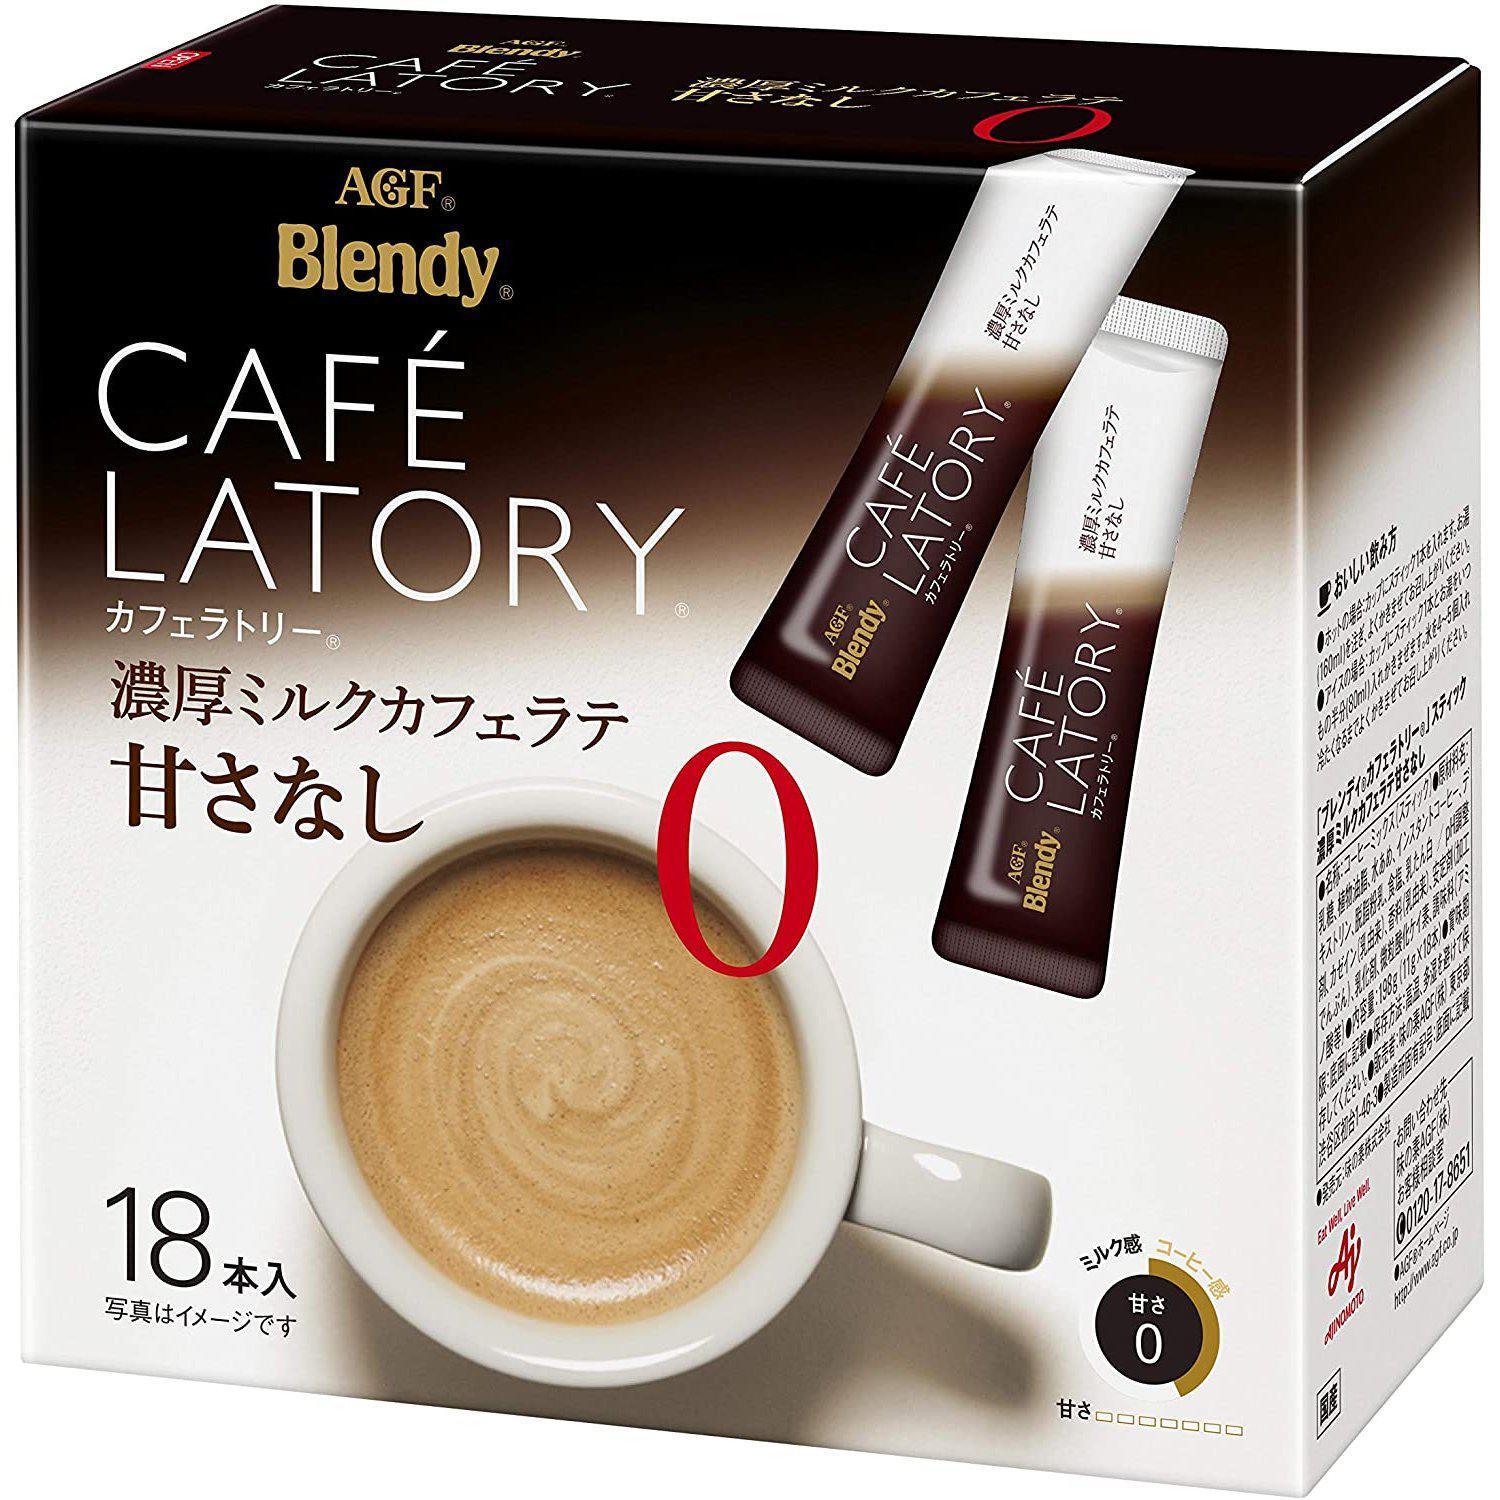 AGF Blendy Café Latory Rich Milk Cafe Latte Unsweetened 18 Sticks, Japanese Taste